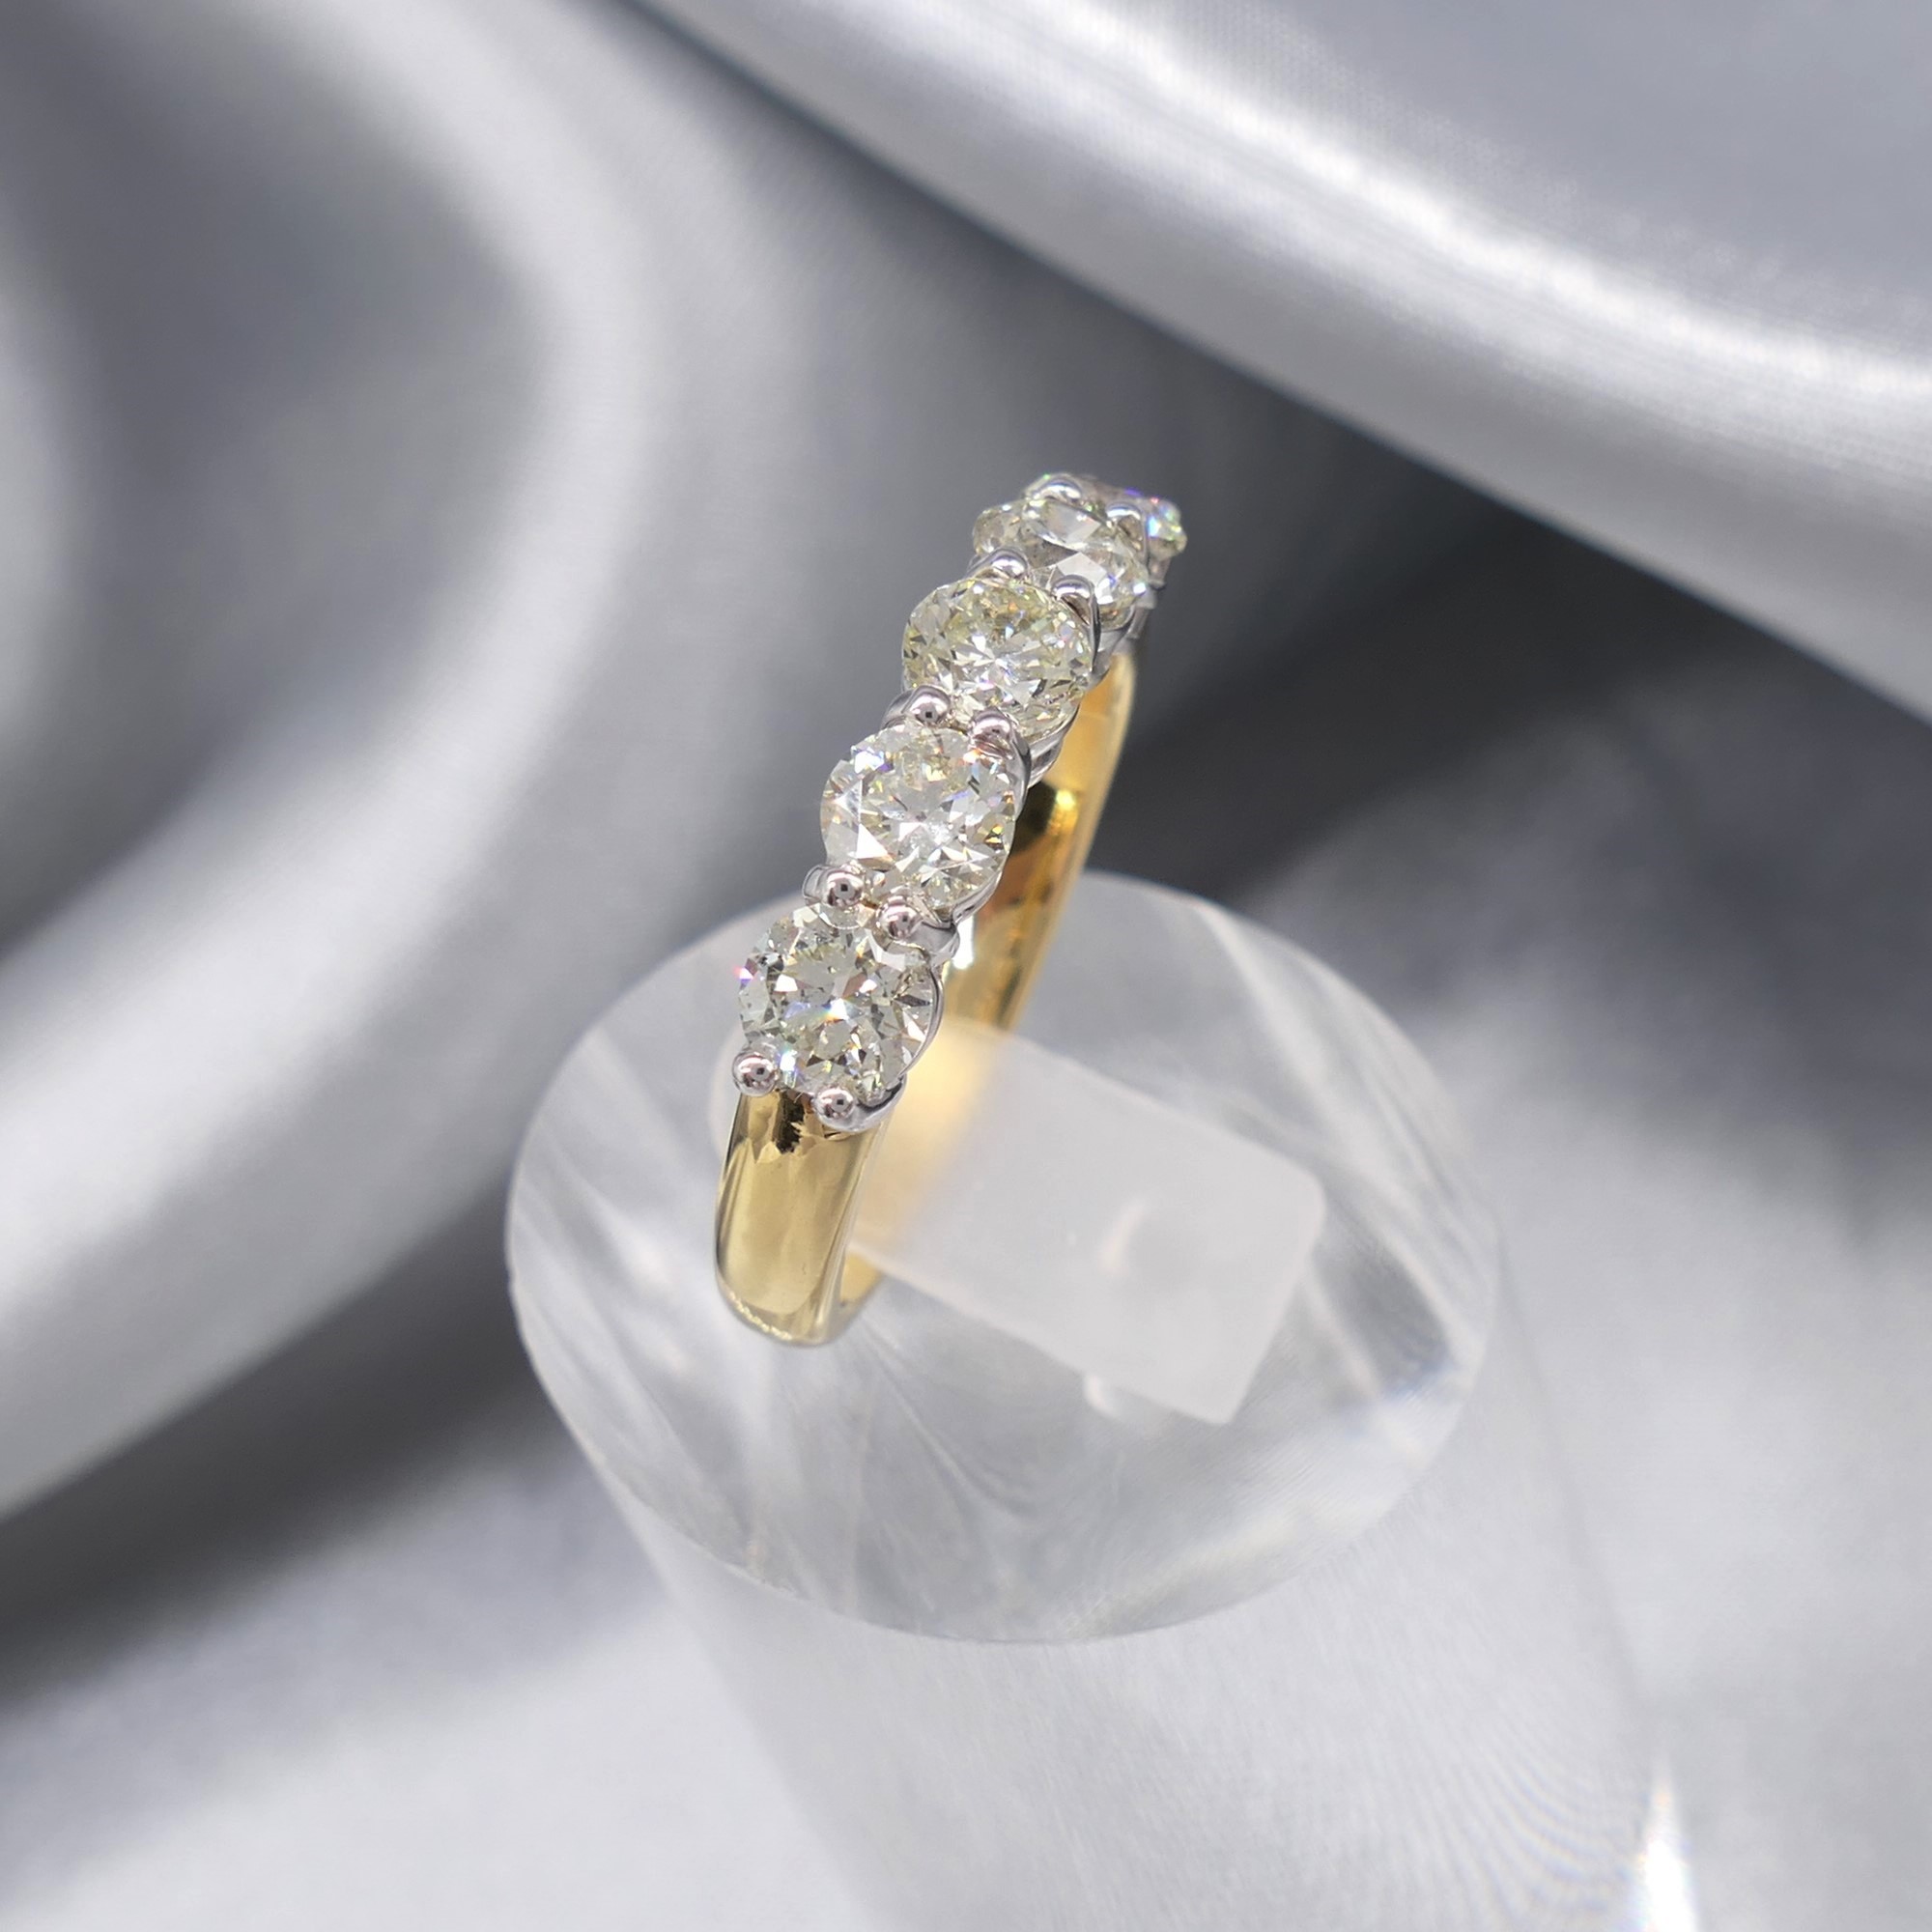 18K Yellow and White Gold 1.53 Carat 5 Stone Diamond Ring - Image 4 of 7